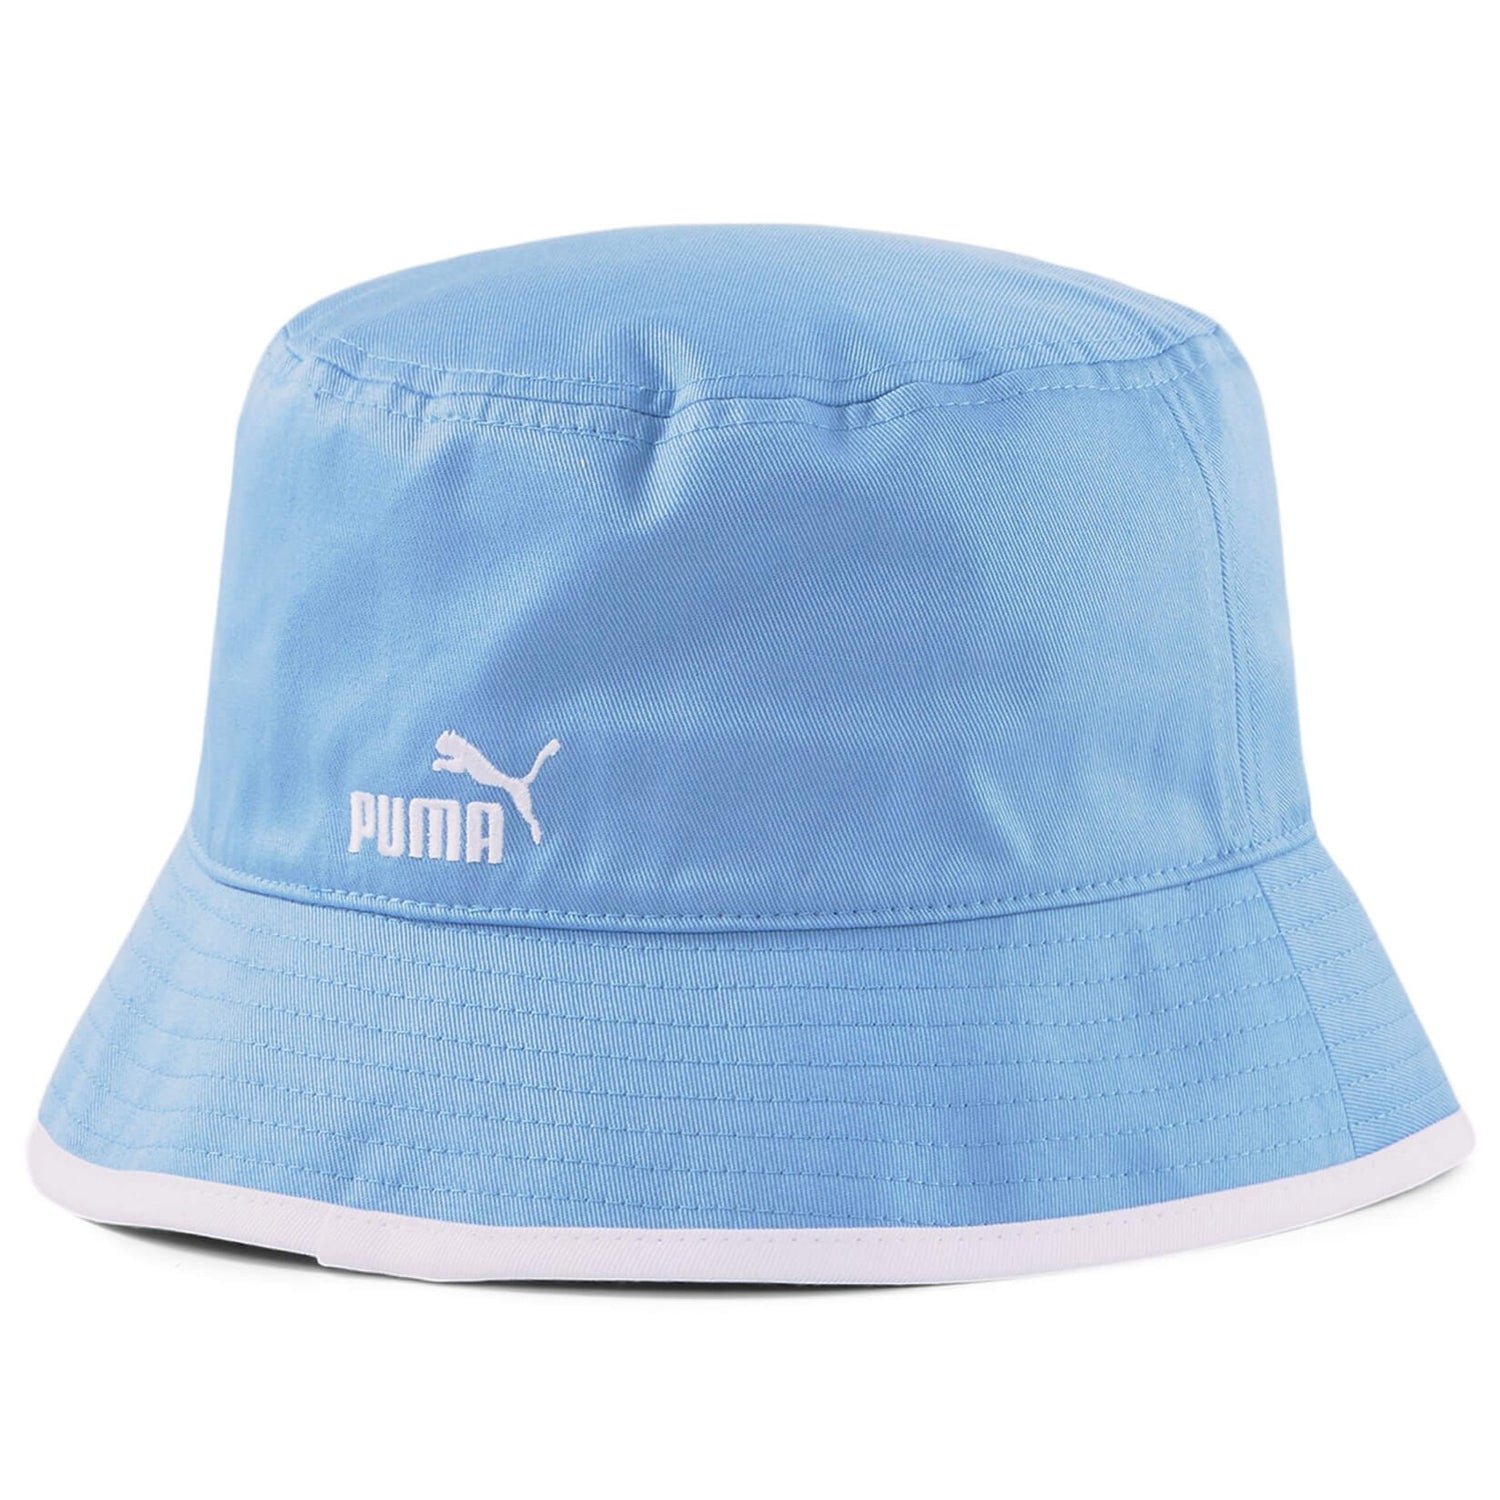 Puma Manchester City T7 Bucket Hat - Light Blue -White (Back)